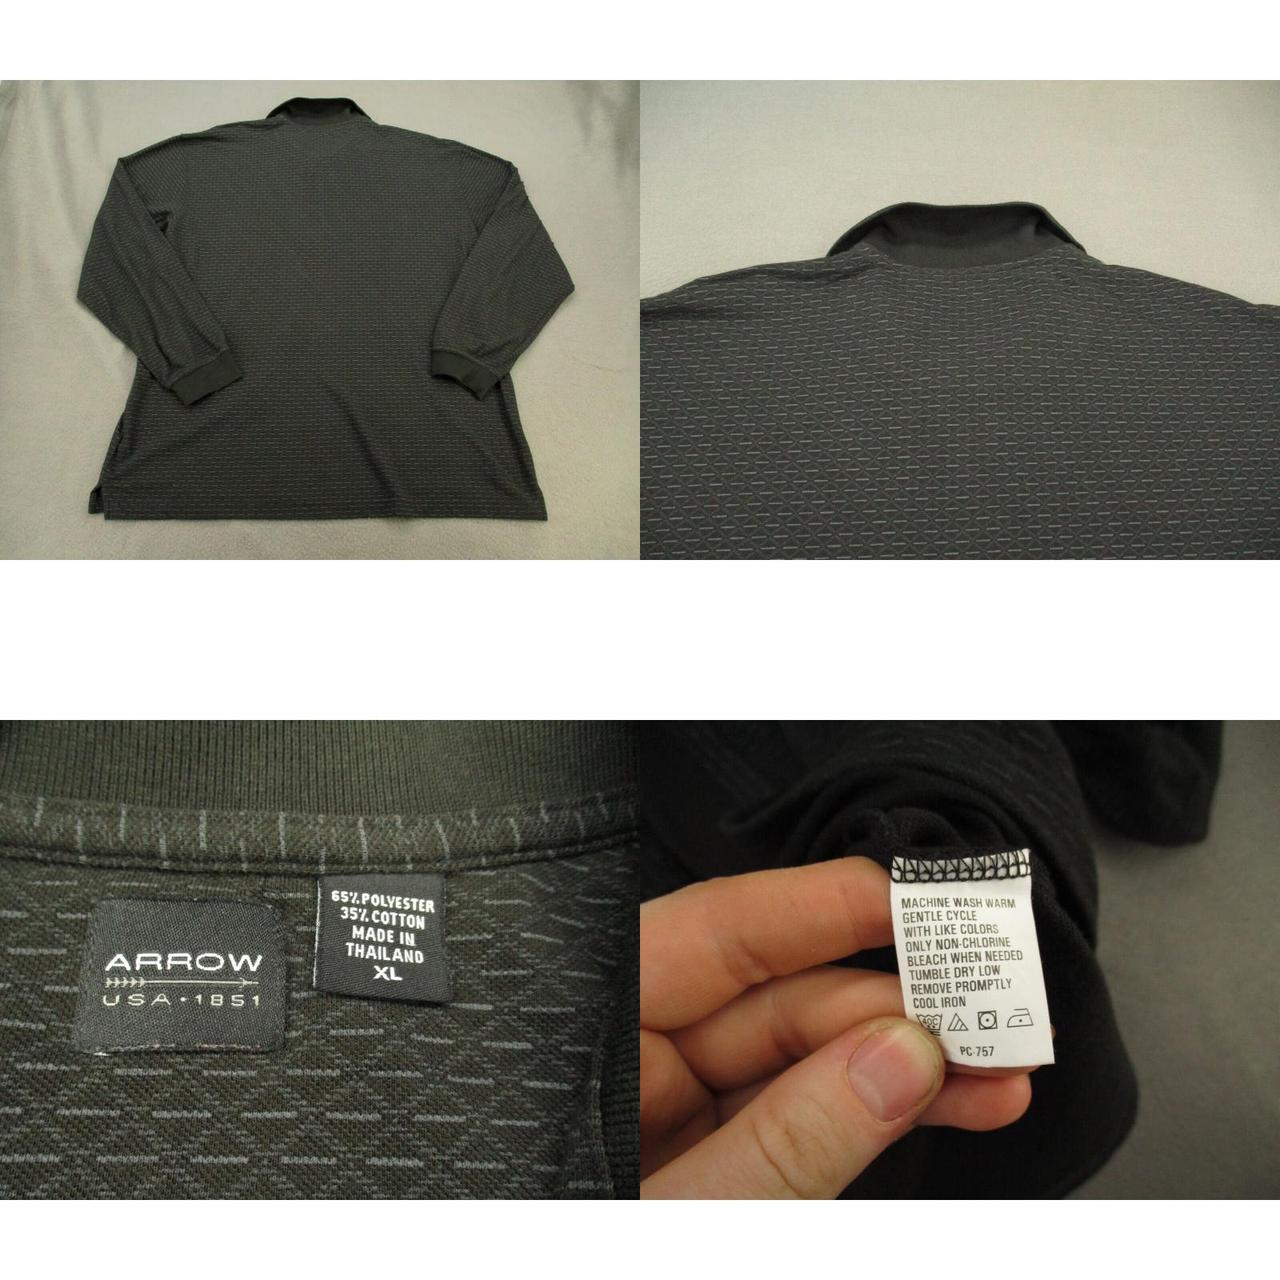 Arrow Polo Shirt Adult Extra Large Black Cotton Long... - Depop